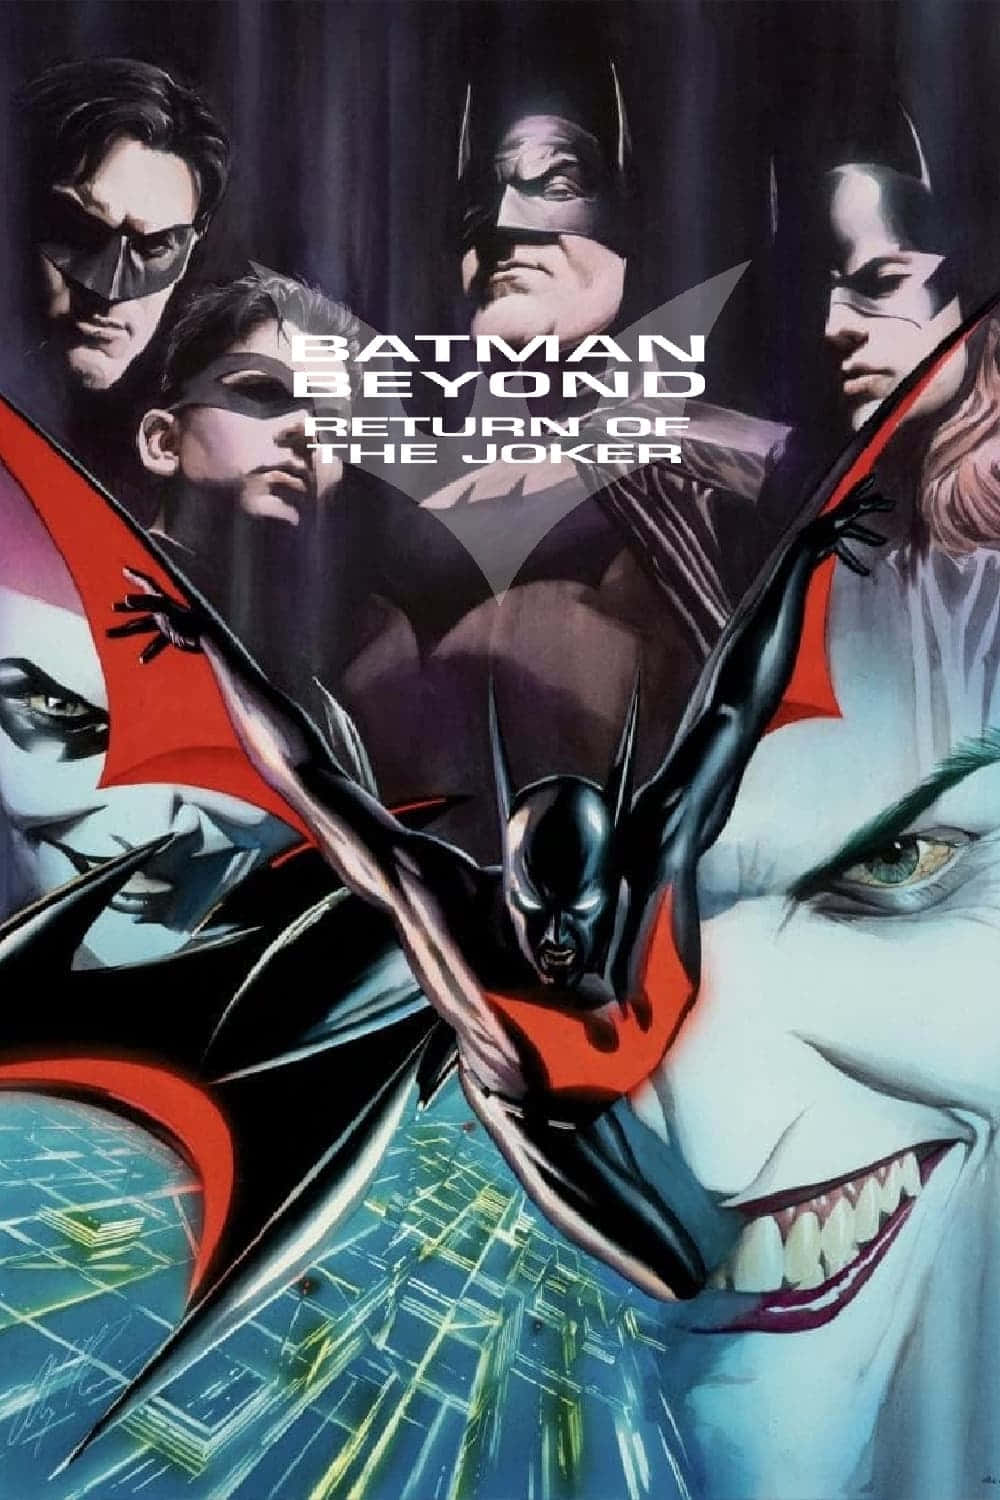 Batman Beyond: Return of the Joker in action Wallpaper